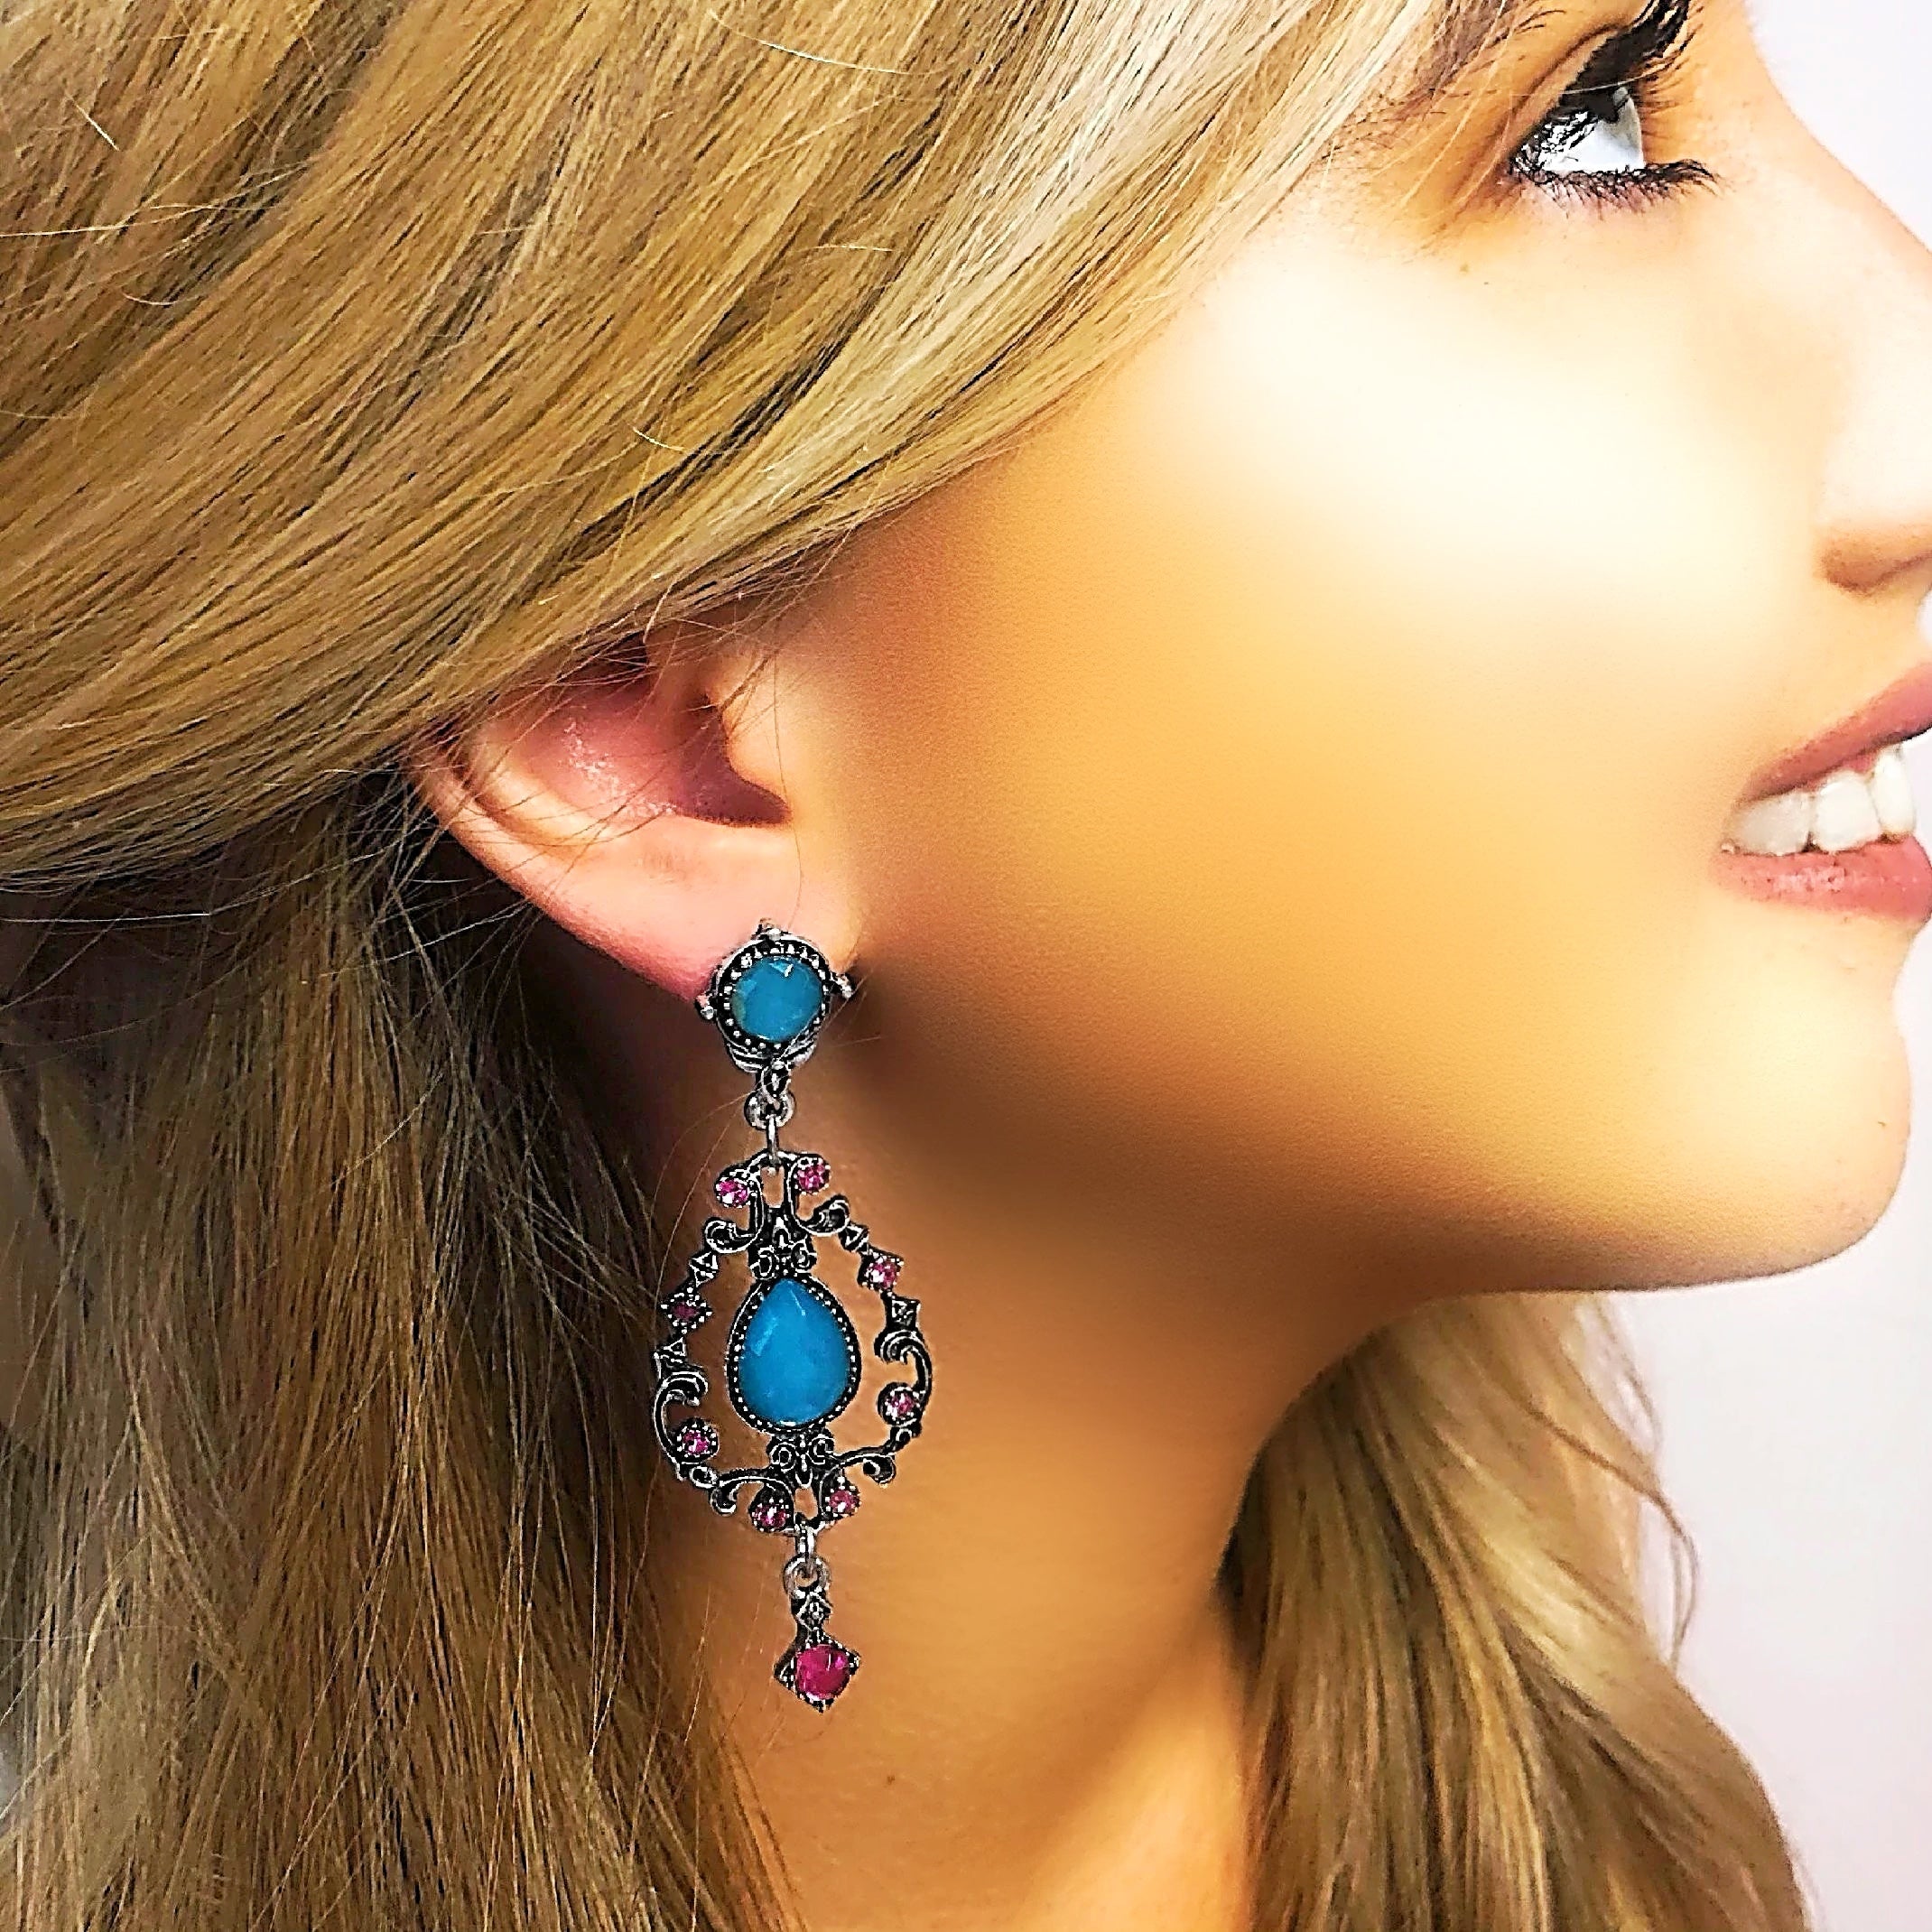 Blue gem earrings 